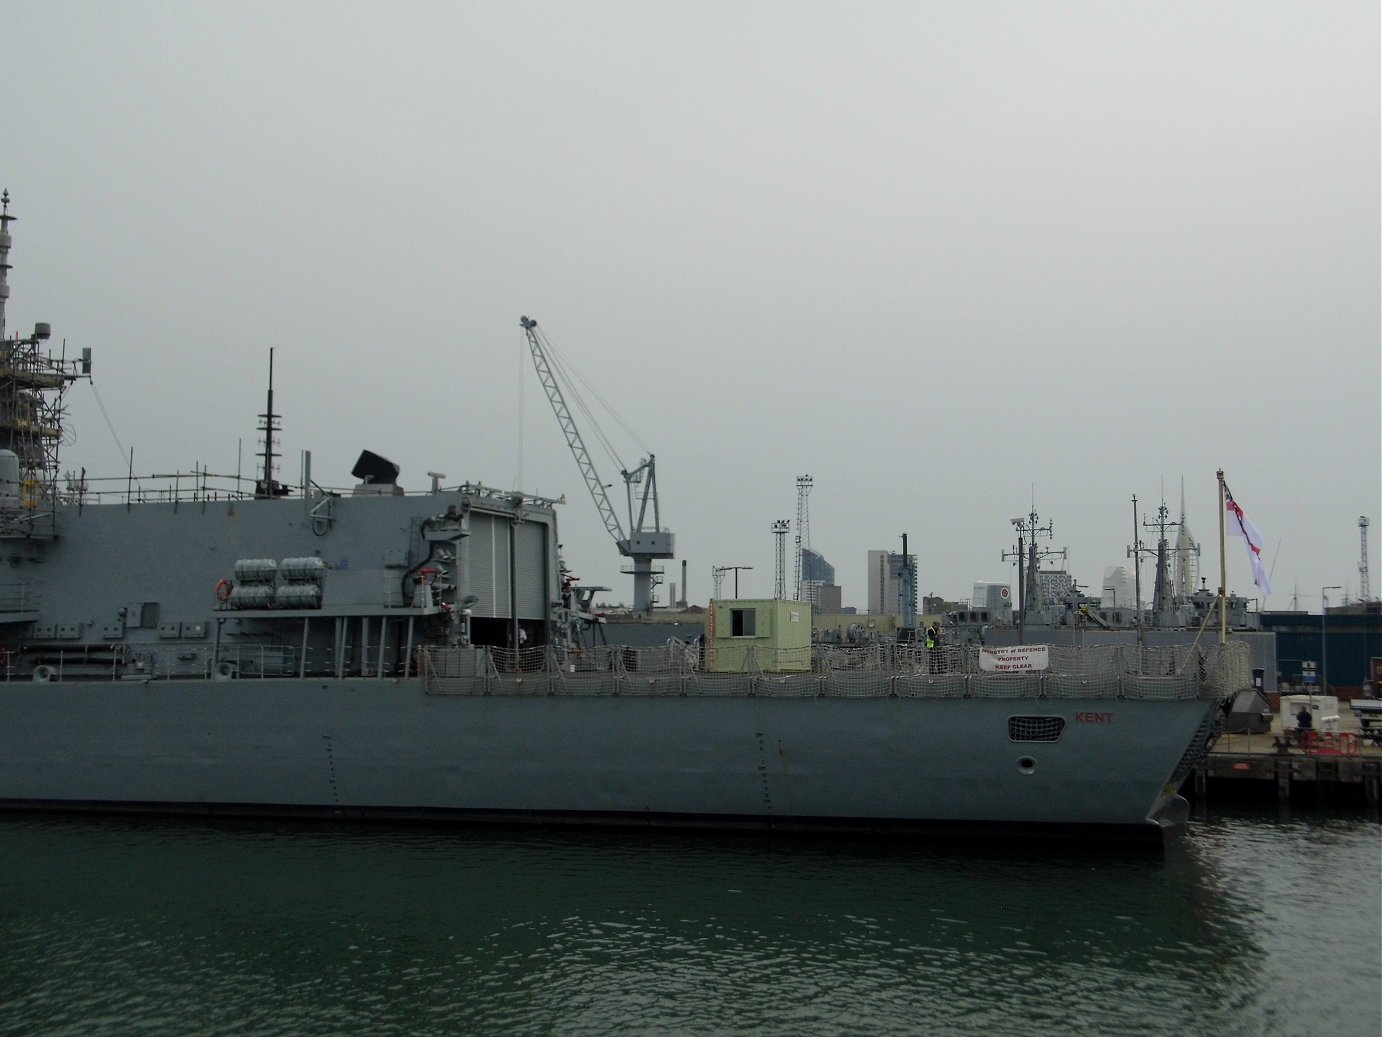 Type 23 frigate H.M.S. Kent F78 at Portsmouth Naval Base 23 April 2019